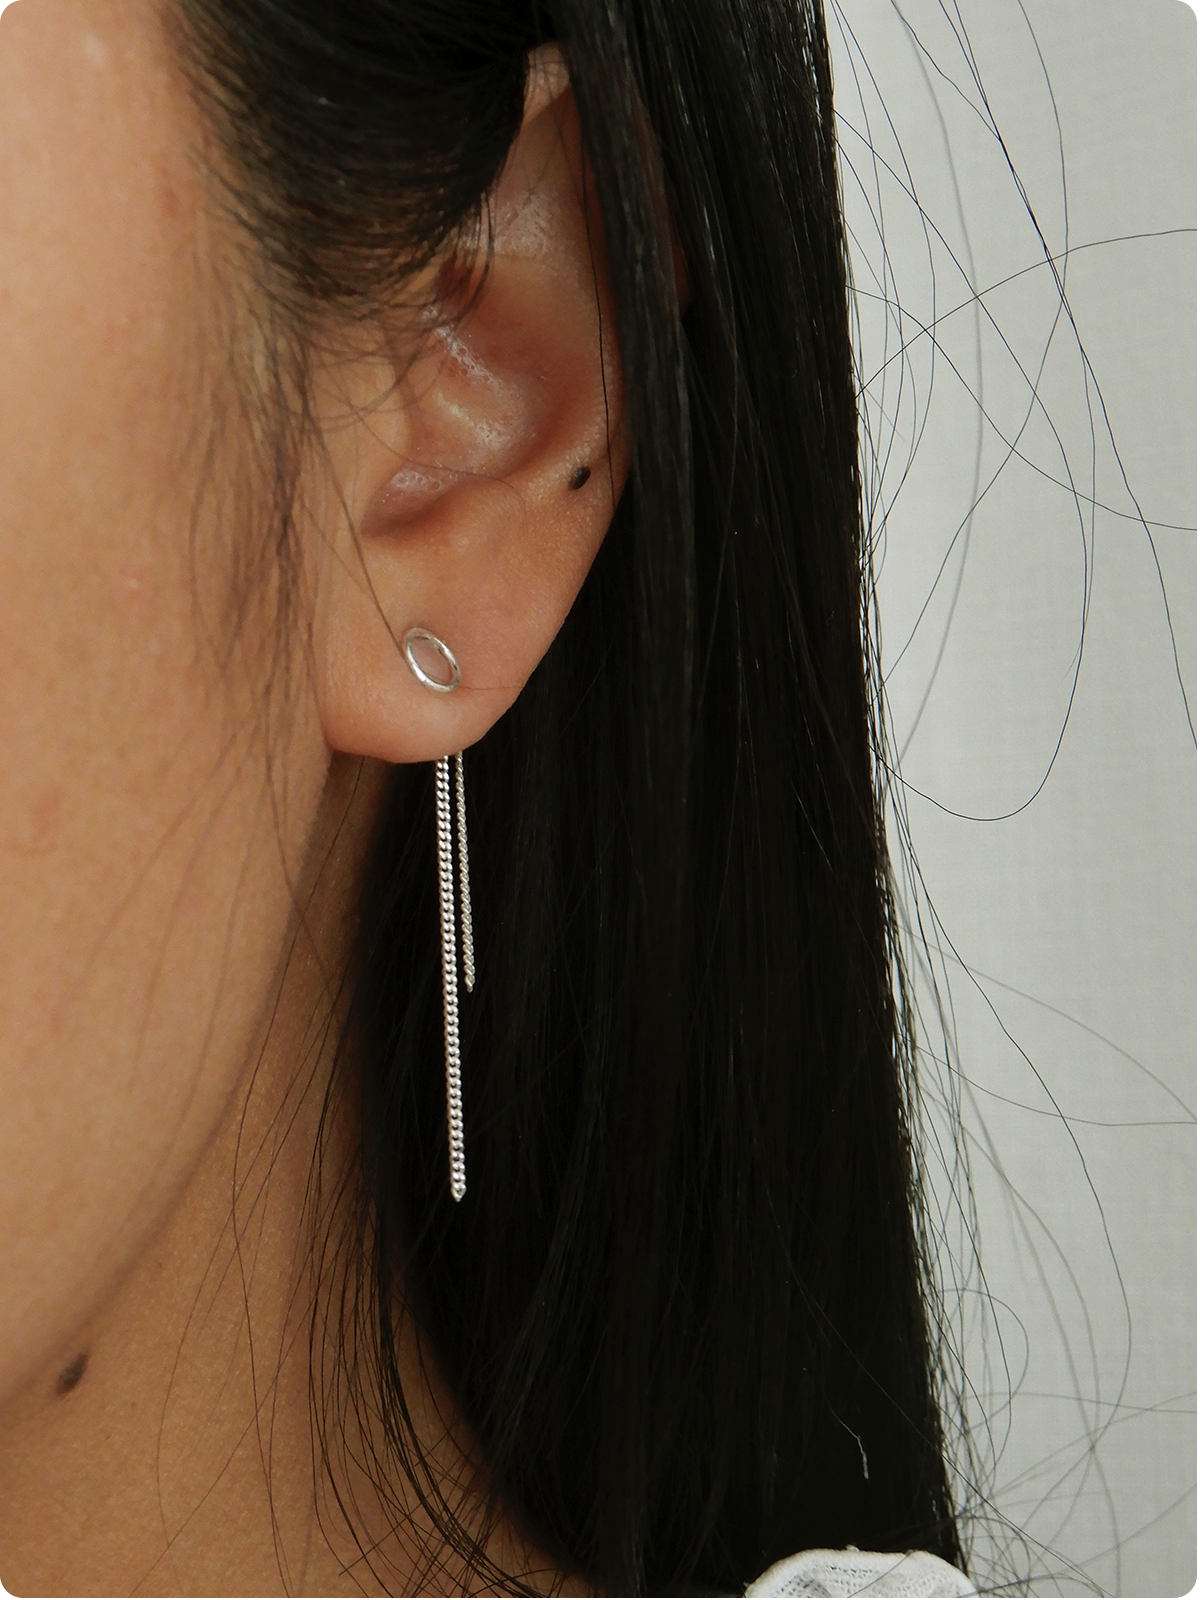 Earring | The silver strings